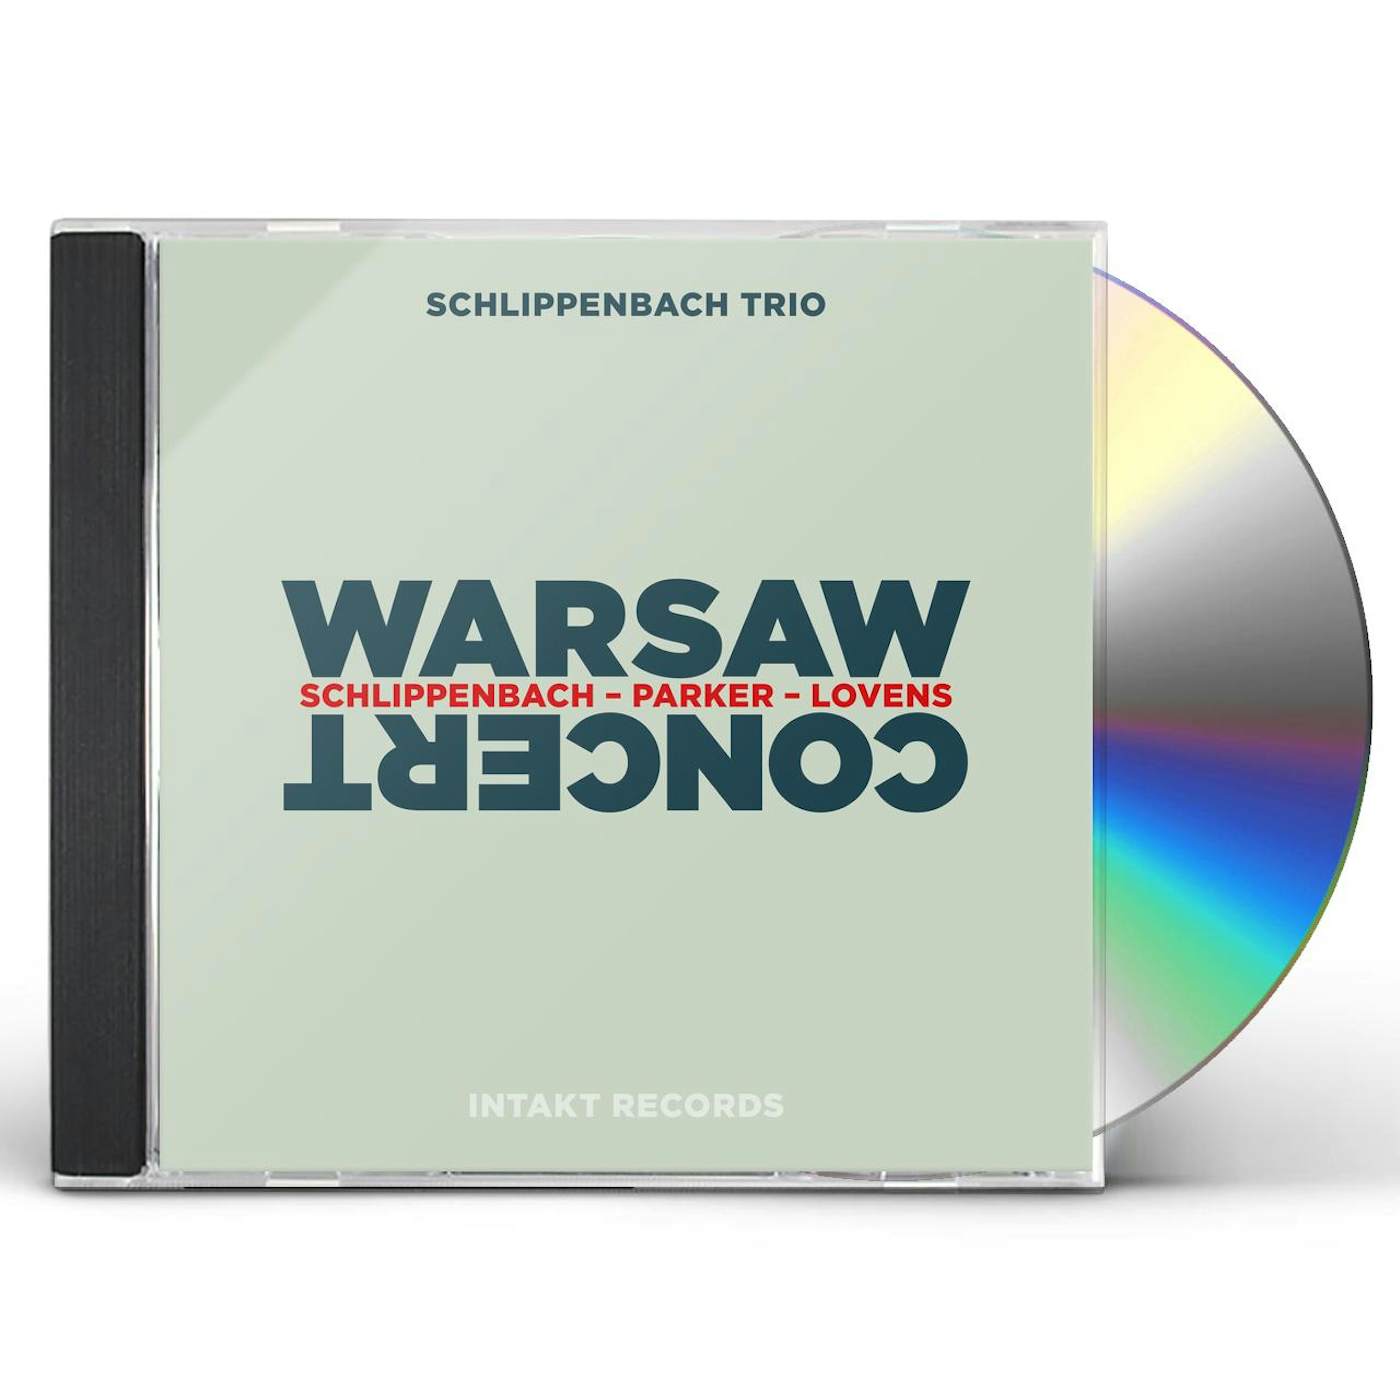 Schlippenbach Trio WARSAW CONCERT CD